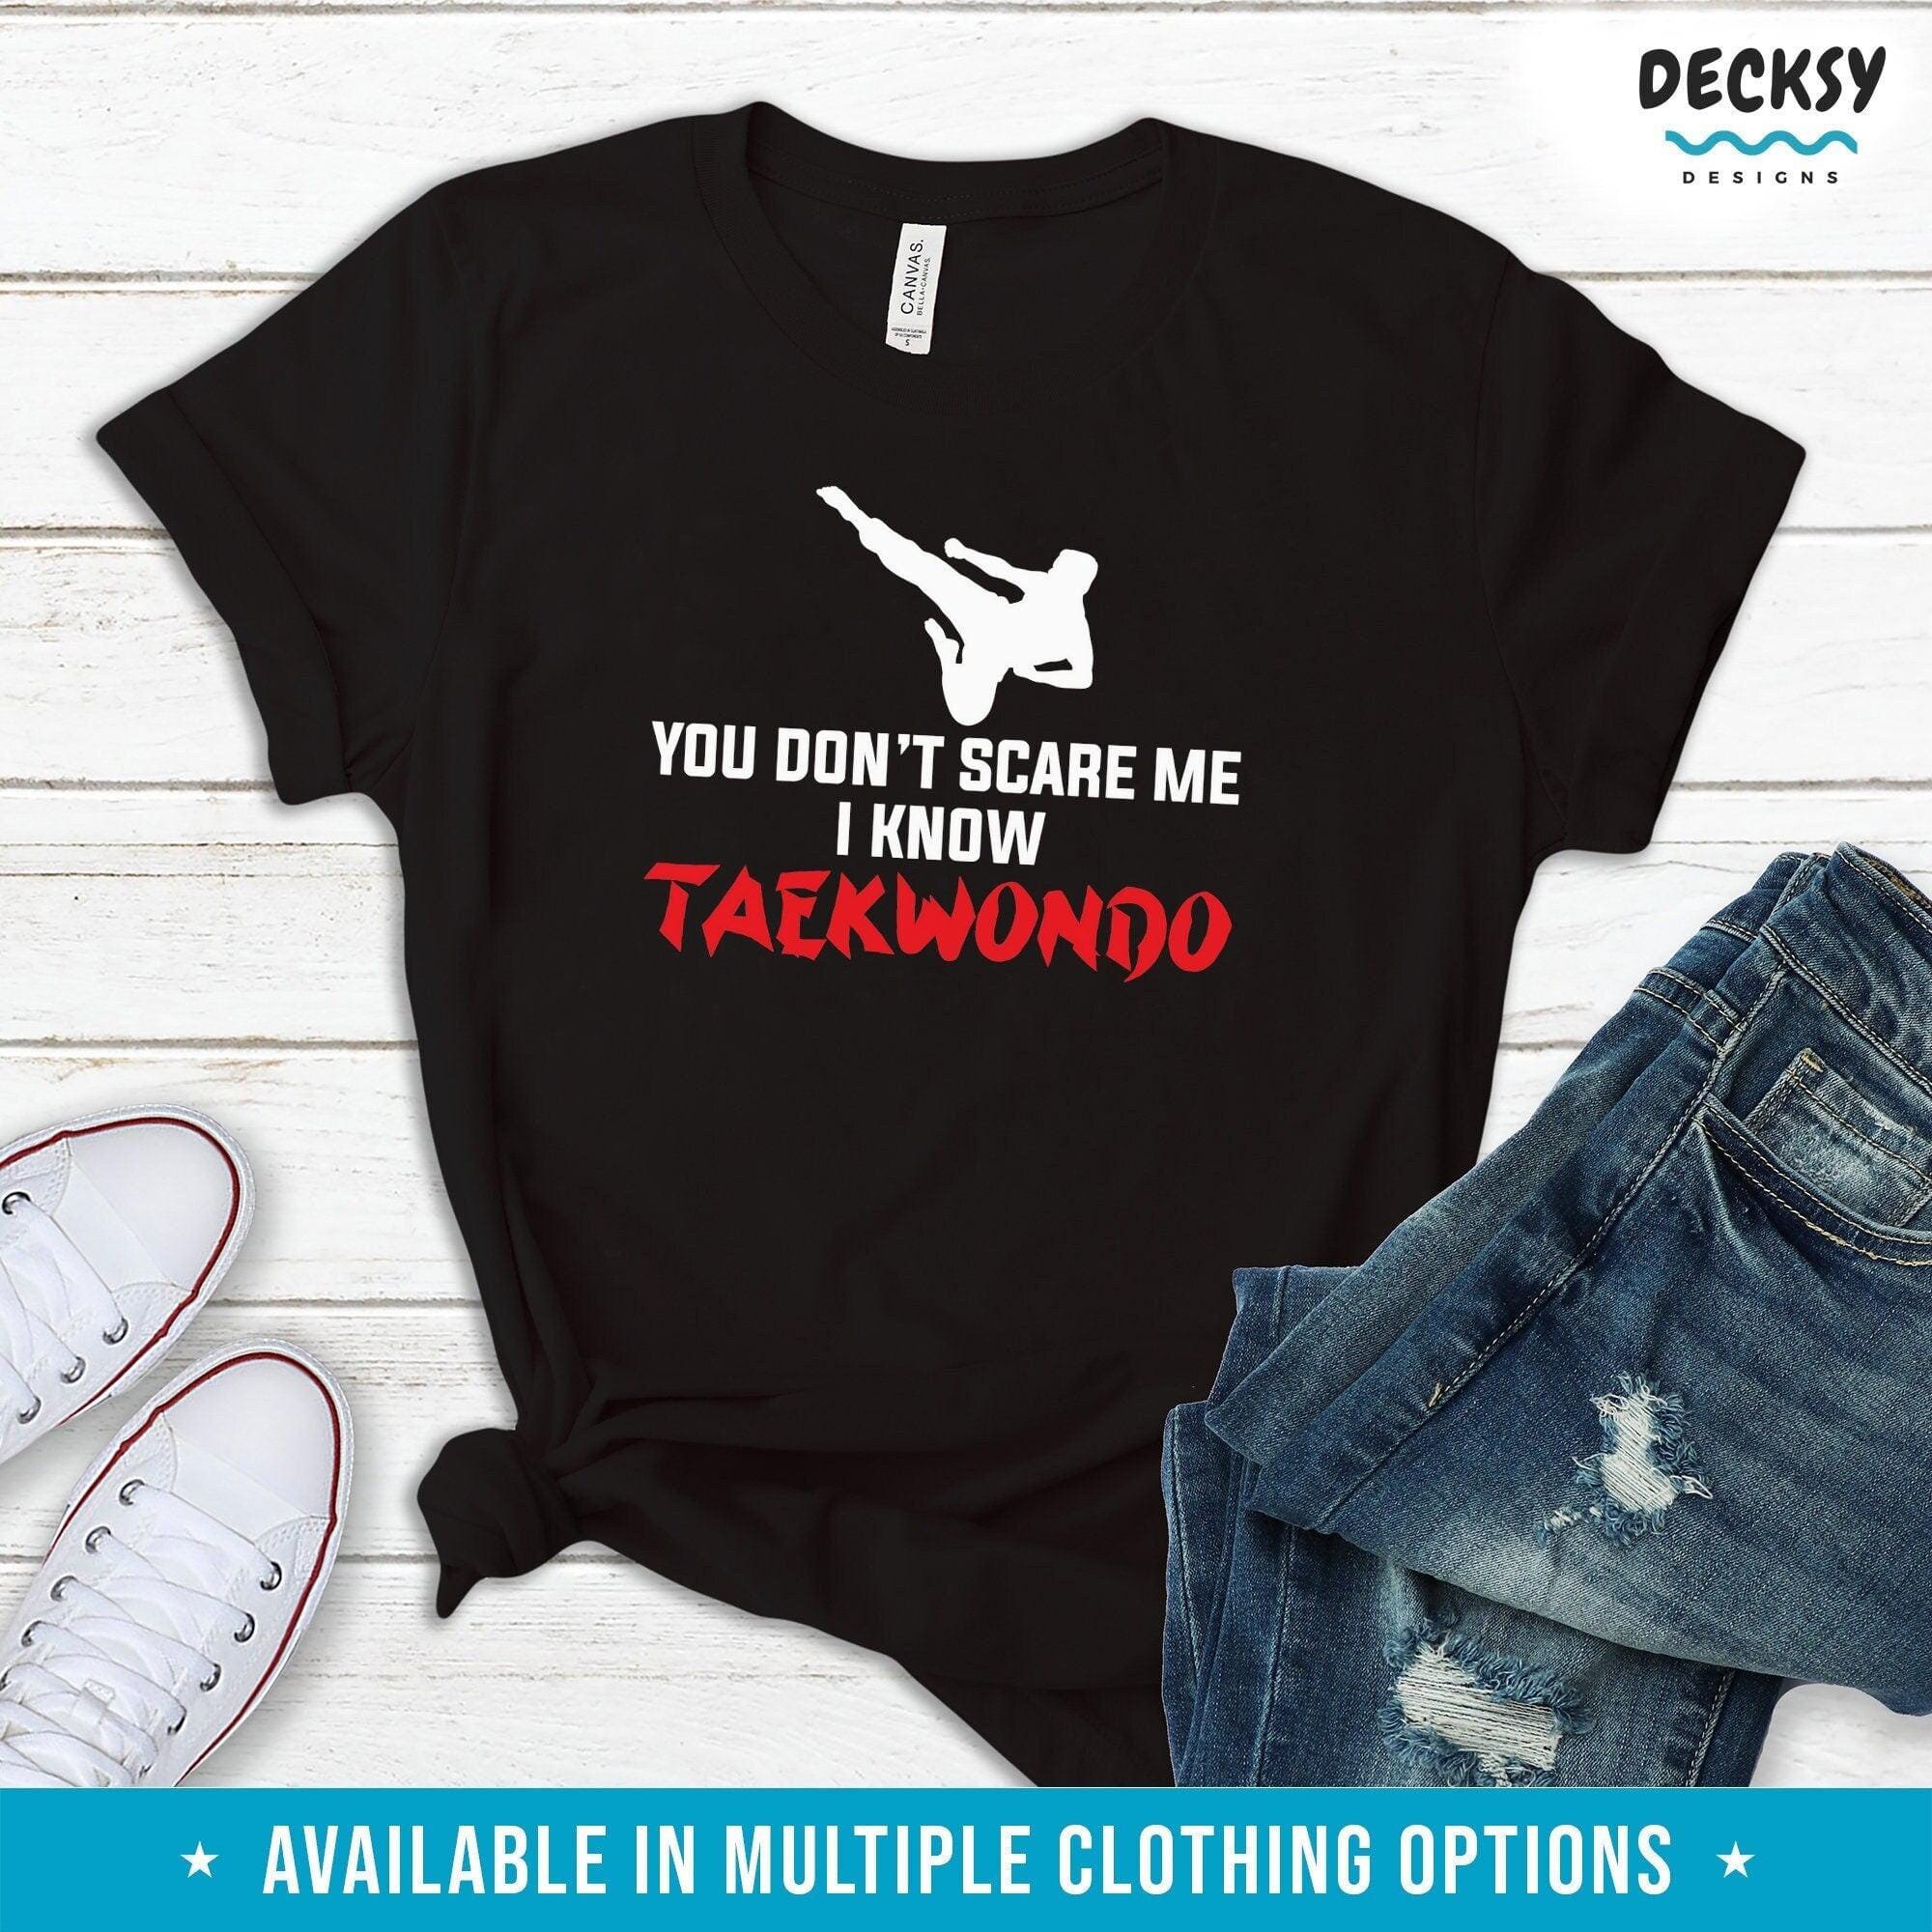 Taekwondo Shirt, Gift For Taekwondo Teacher-Clothing:Gender-Neutral Adult Clothing:Tops & Tees:T-shirts:Graphic Tees-DecksyDesigns